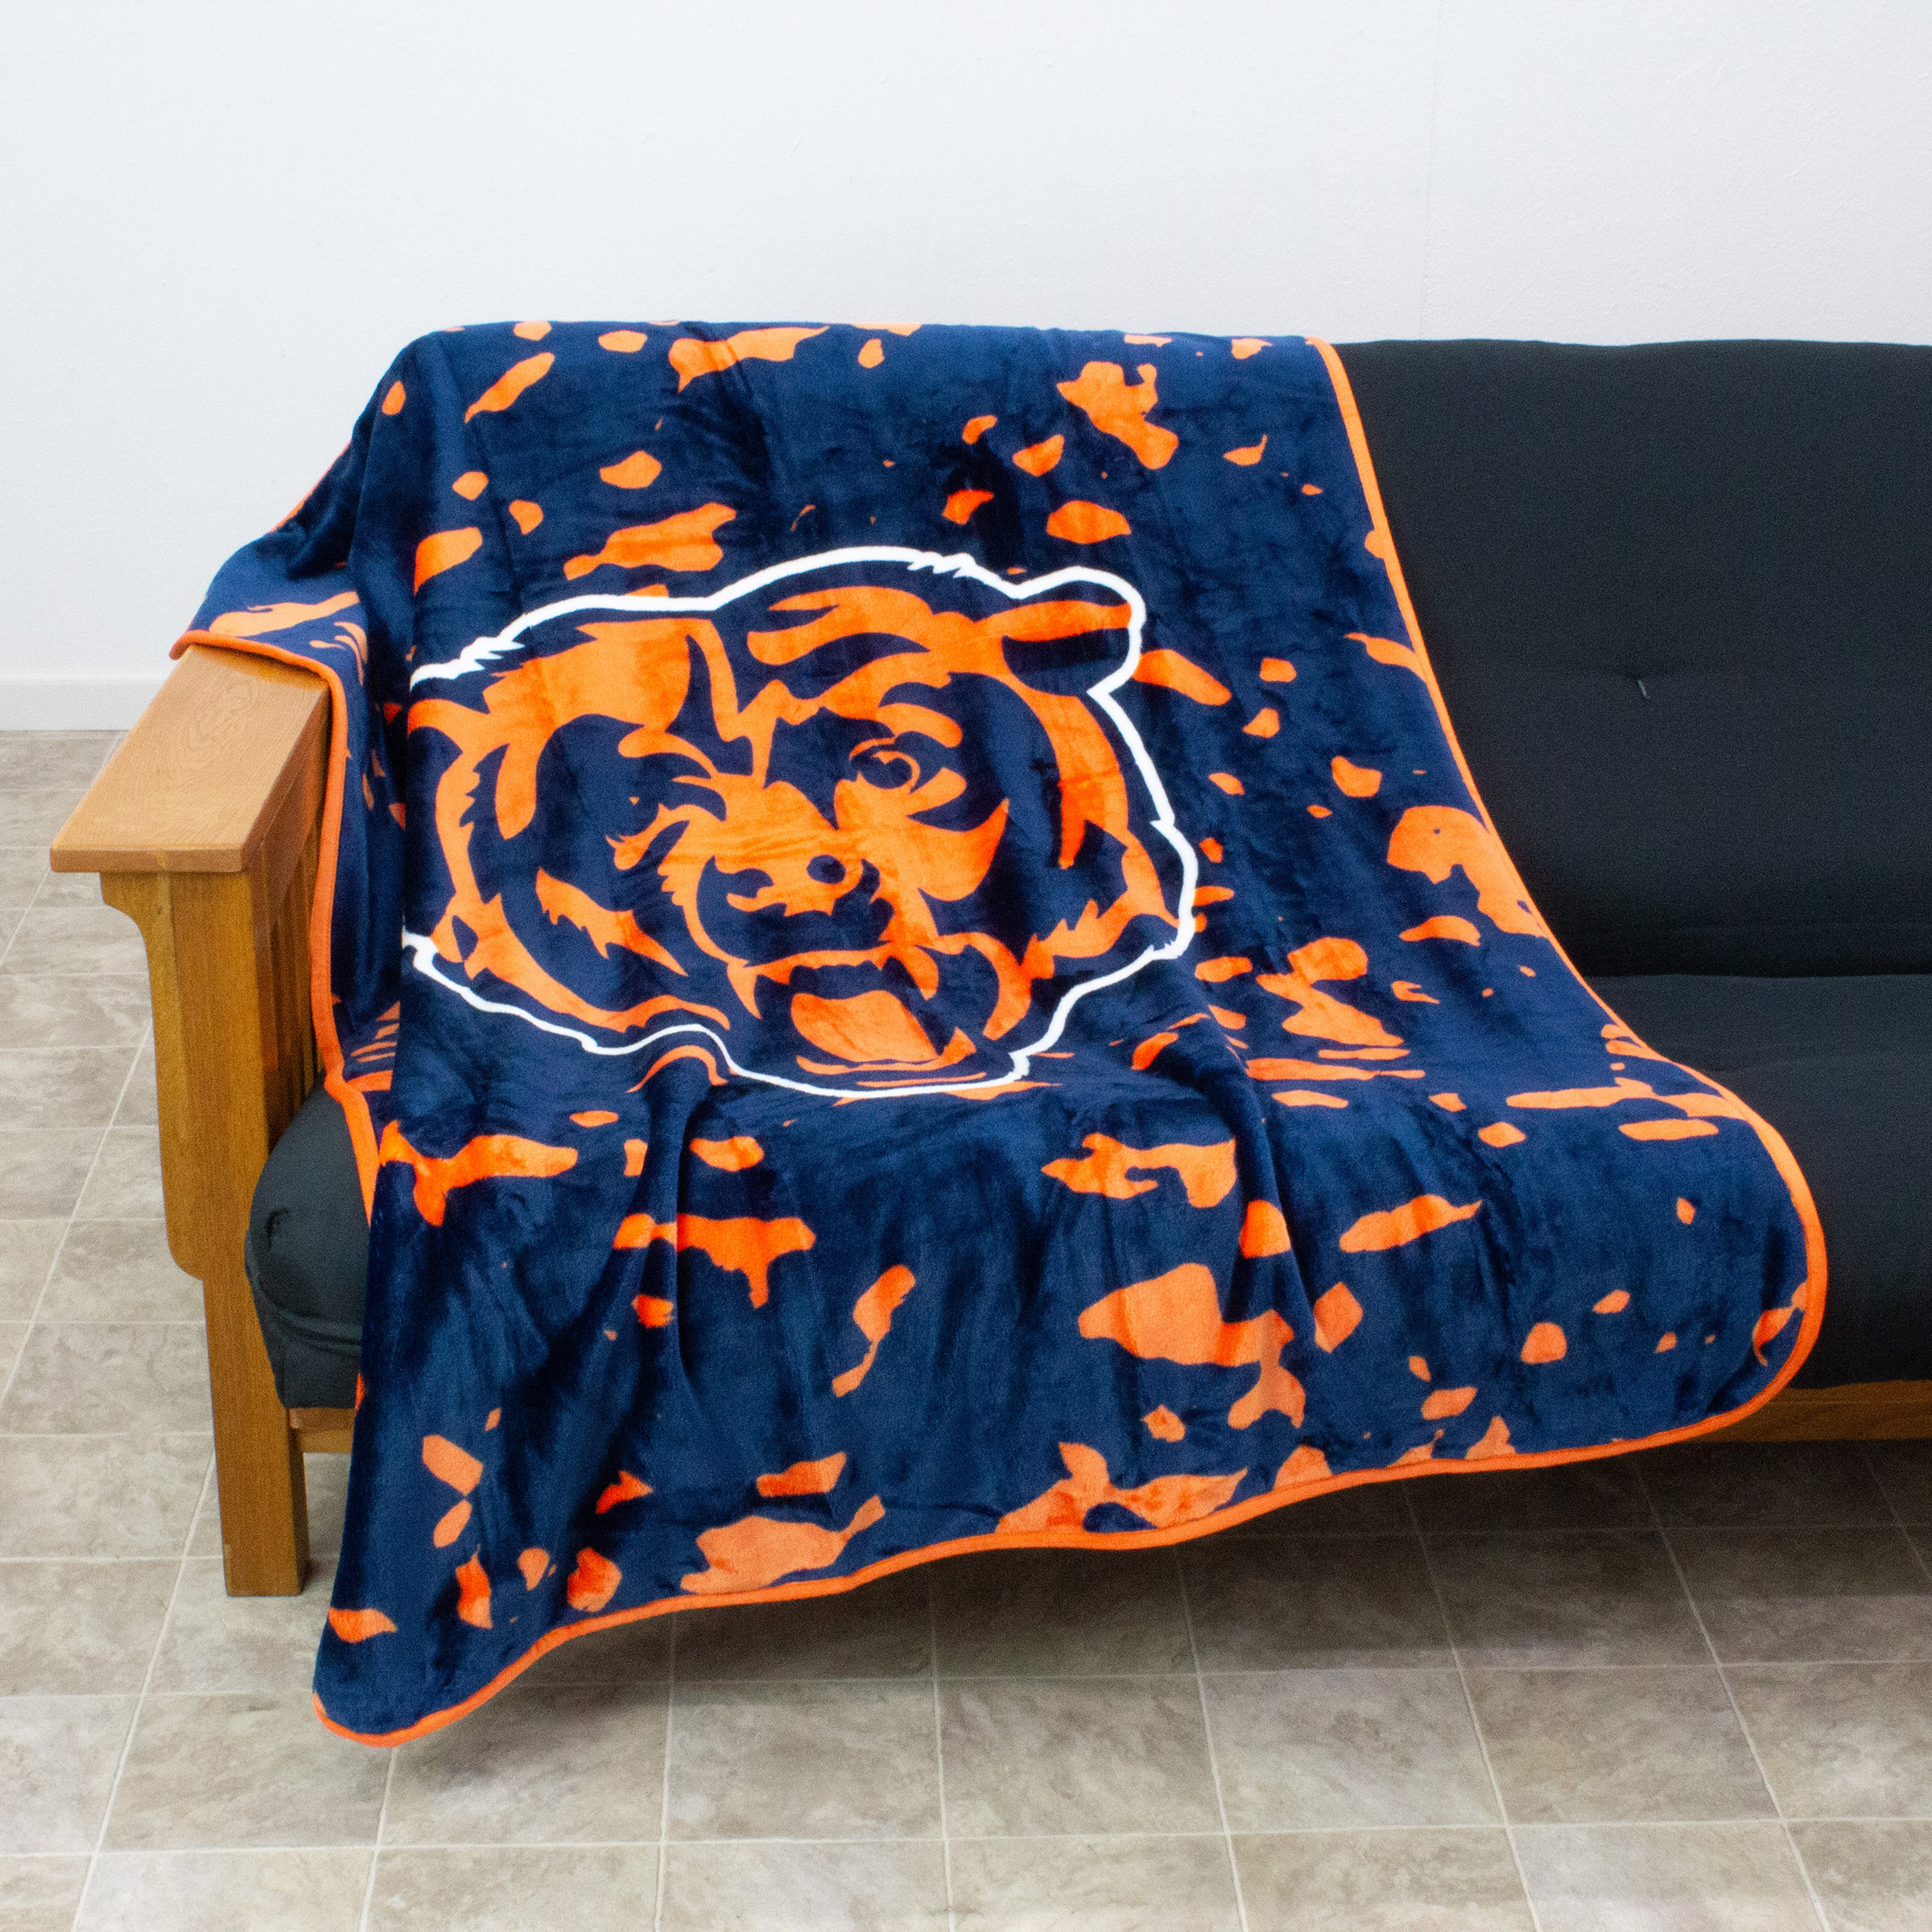 Chicago Bears 50 x 60 Teen Adult Unisex Comfy Throw Blanket - image 4 of 5